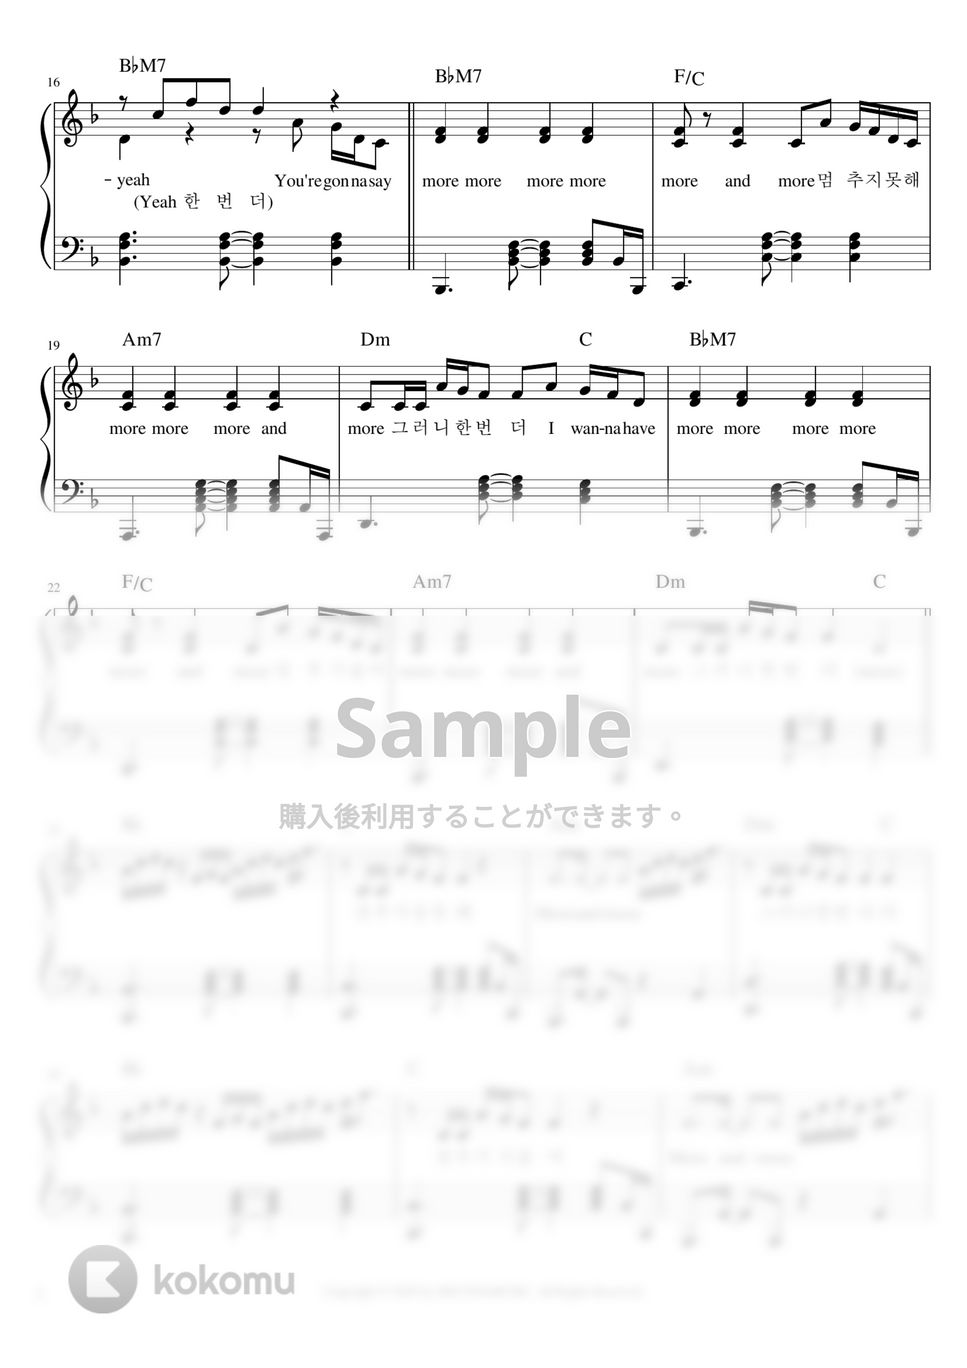 TWICE - MORE & MORE (中級バージョン) by DEUTDAMUSIC